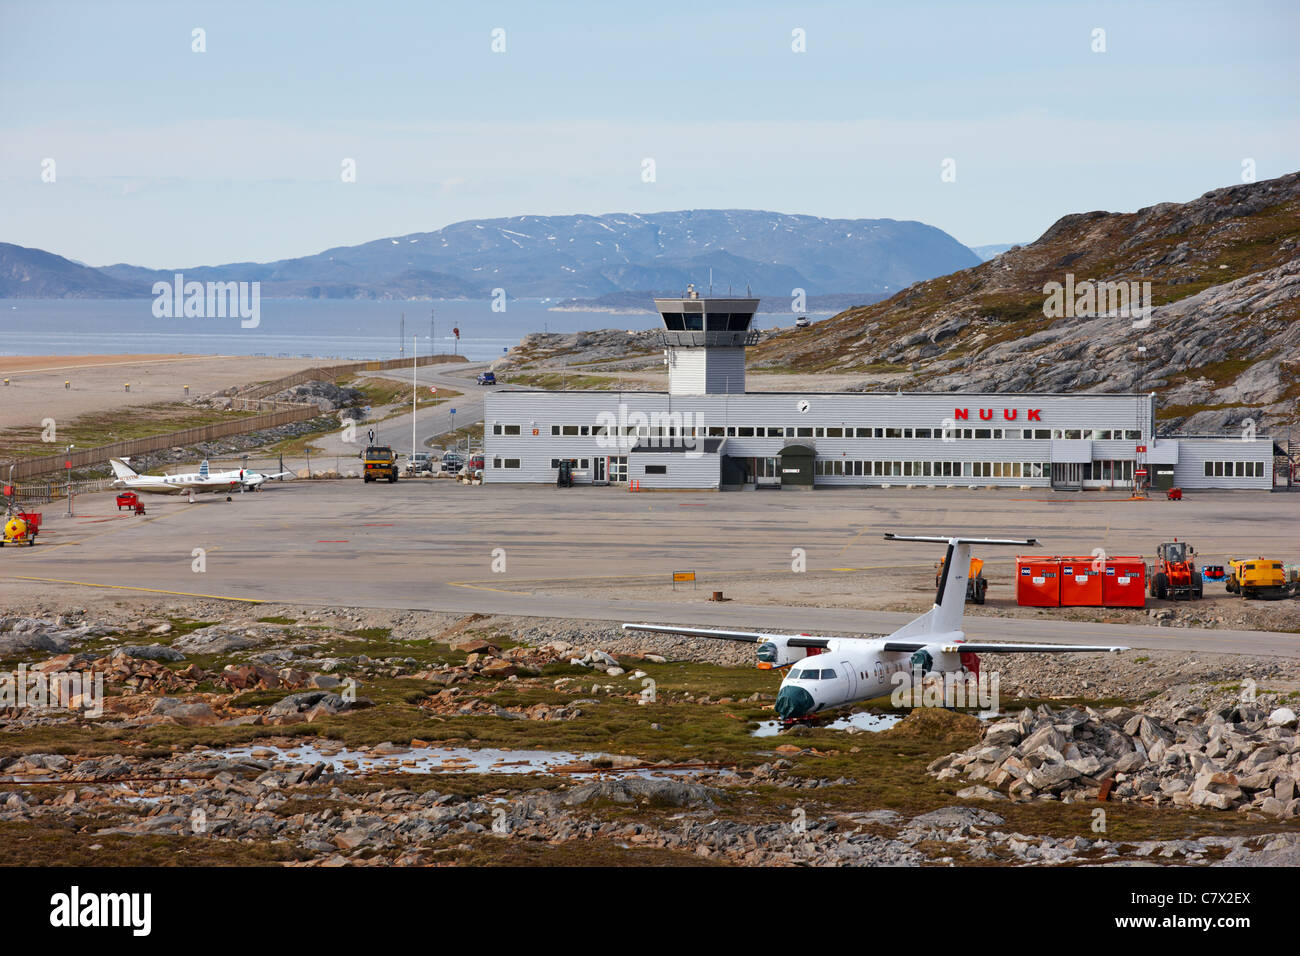 Nuuk Airport, Greenland Stock Photo